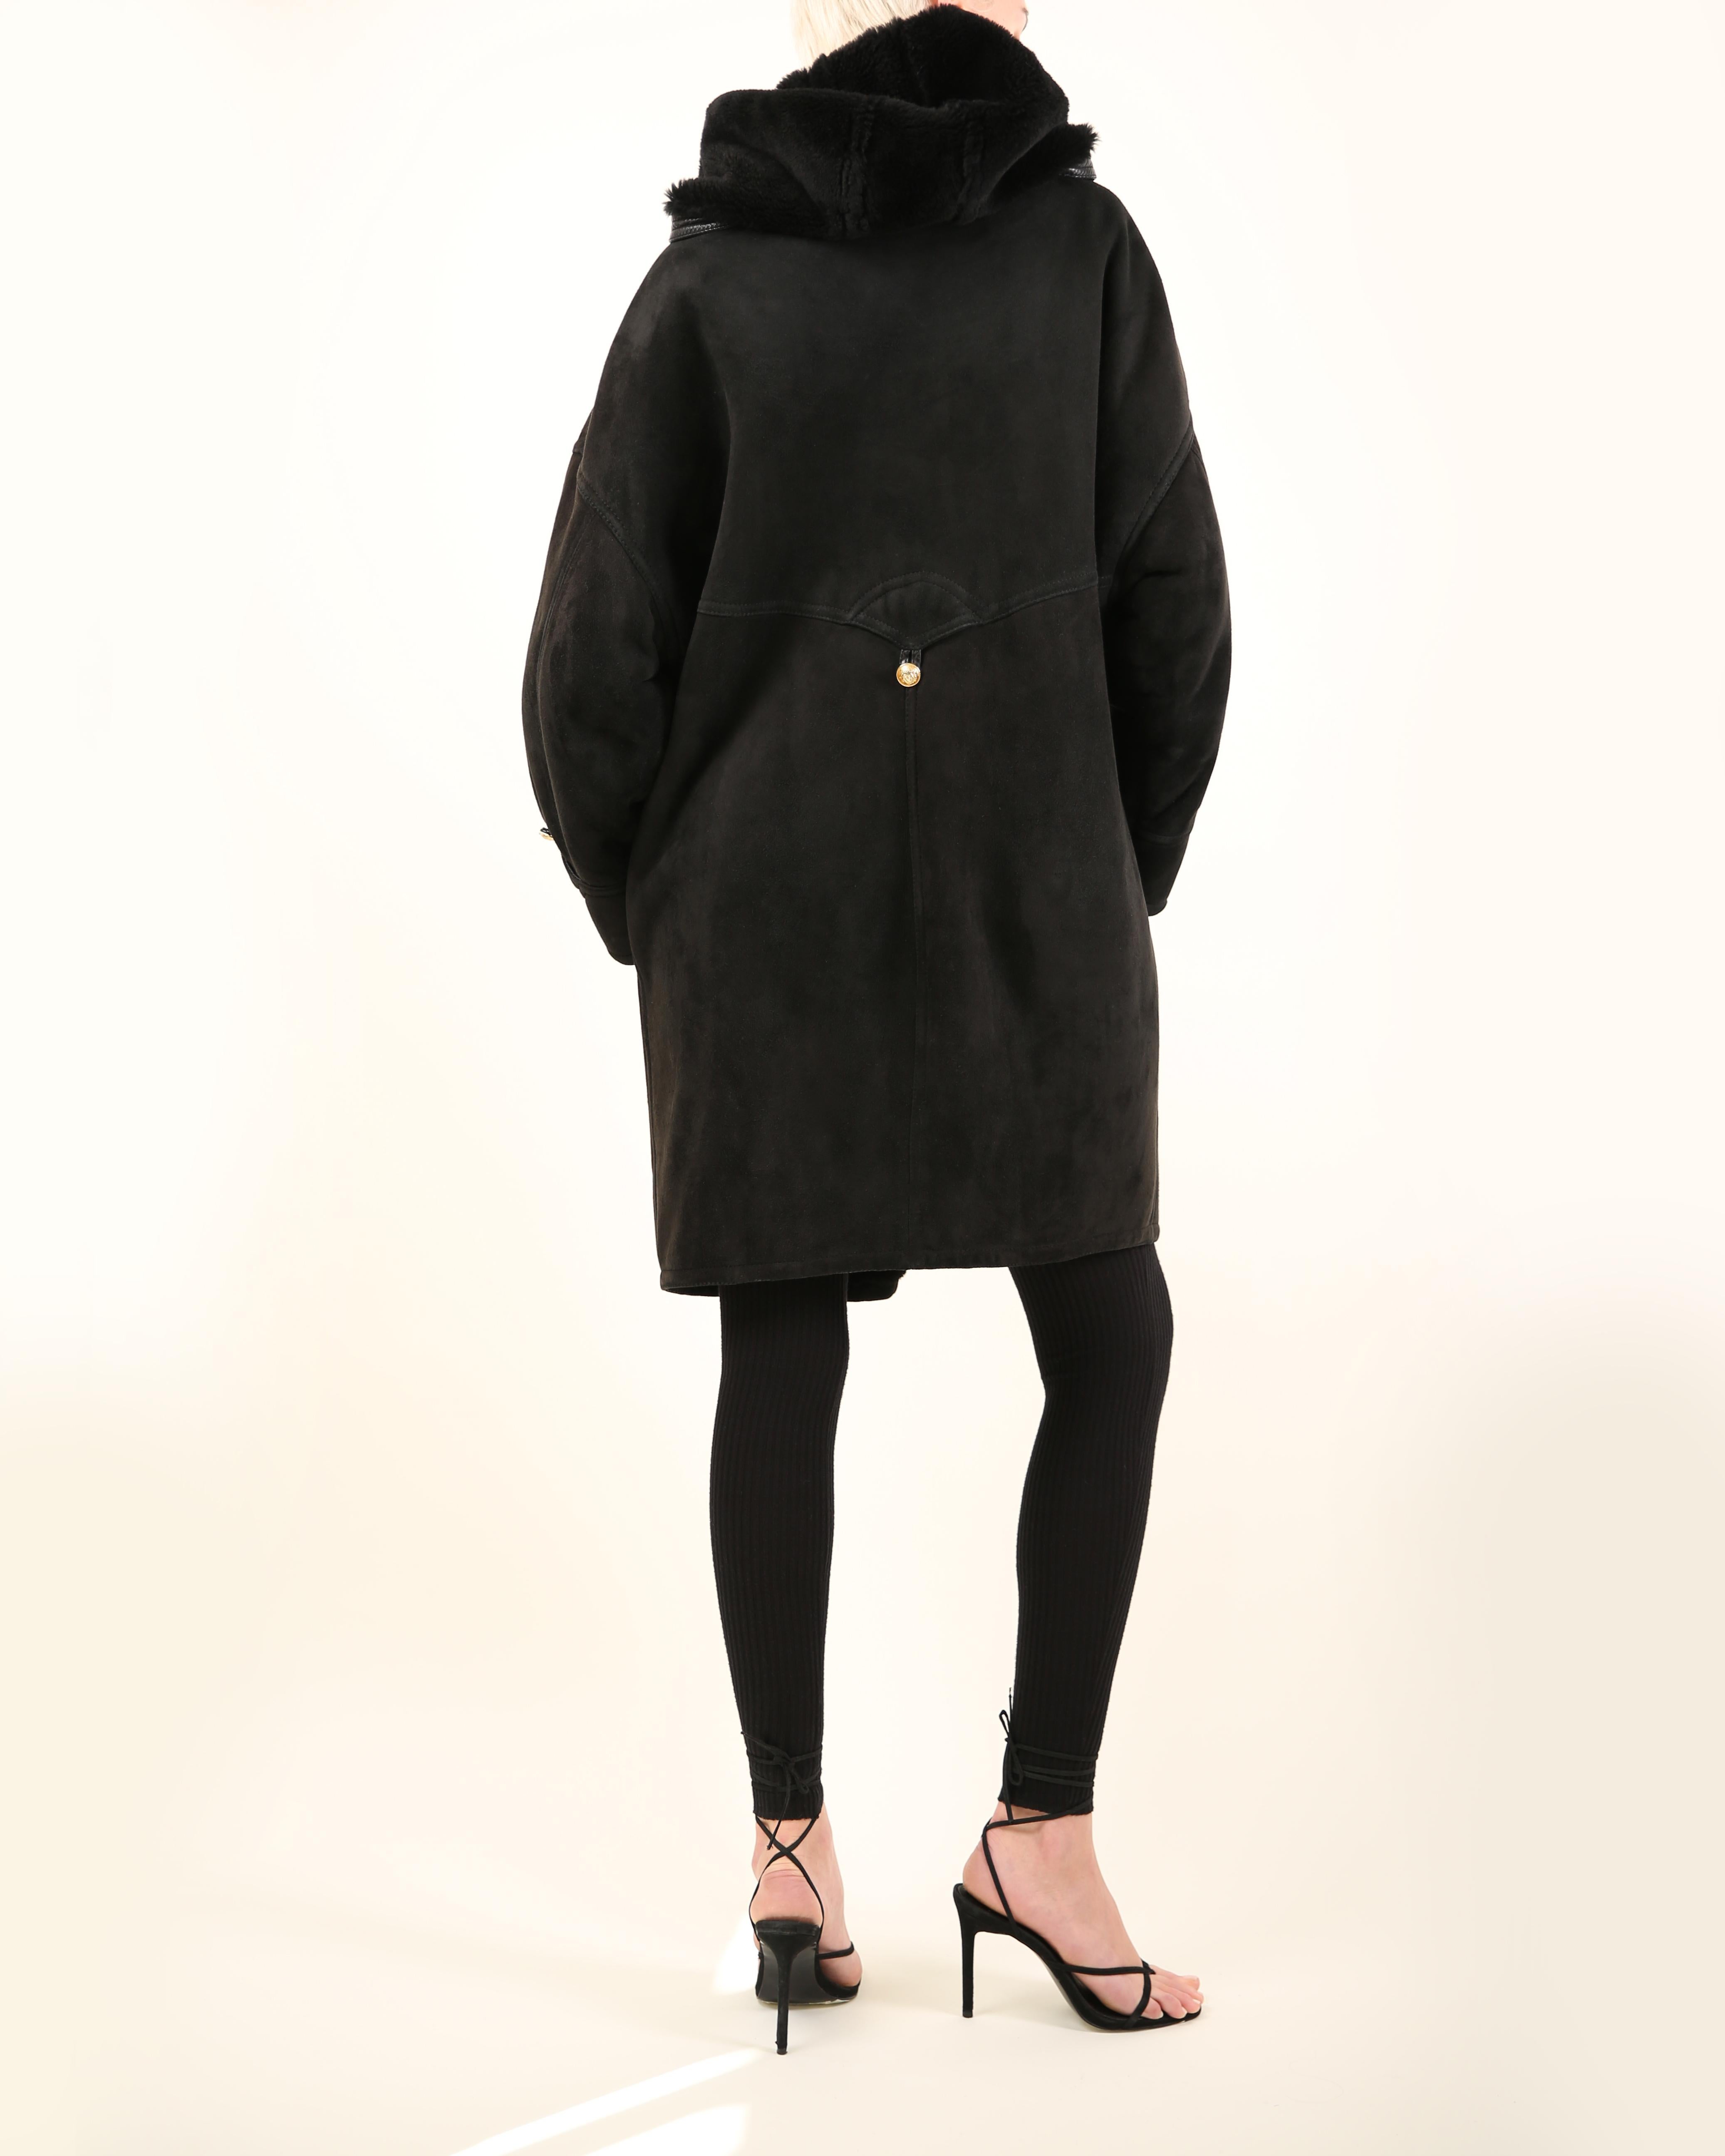 Gianni Versace 90's XS - L black leather suede shearling bondage coat jacket For Sale 10